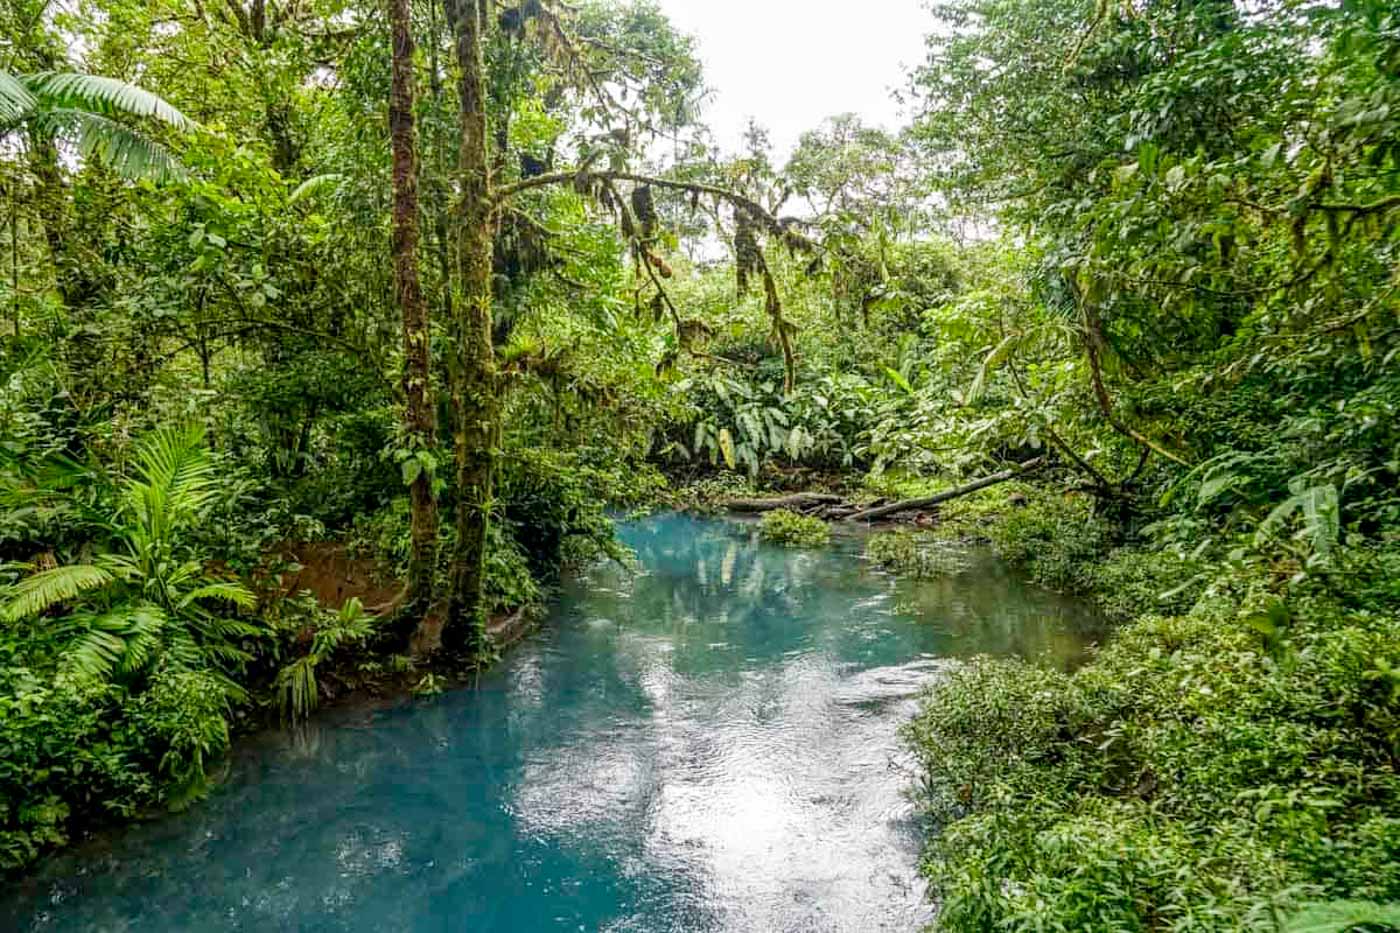 The blue Rio Celeste winding it's way through the Costa Rican rainforest.